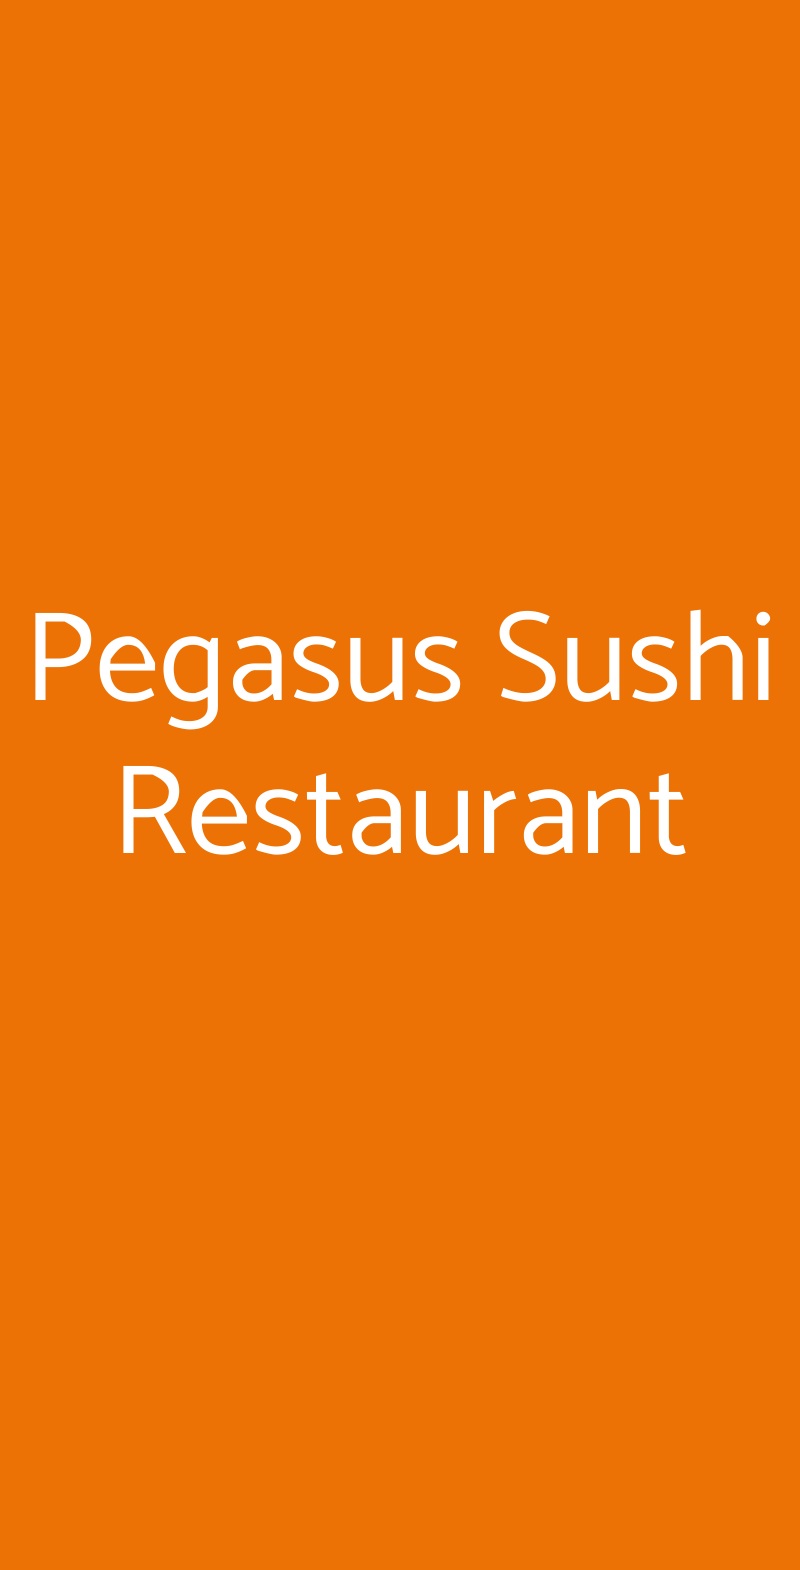 Pegasus Sushi Restaurant Milano menù 1 pagina